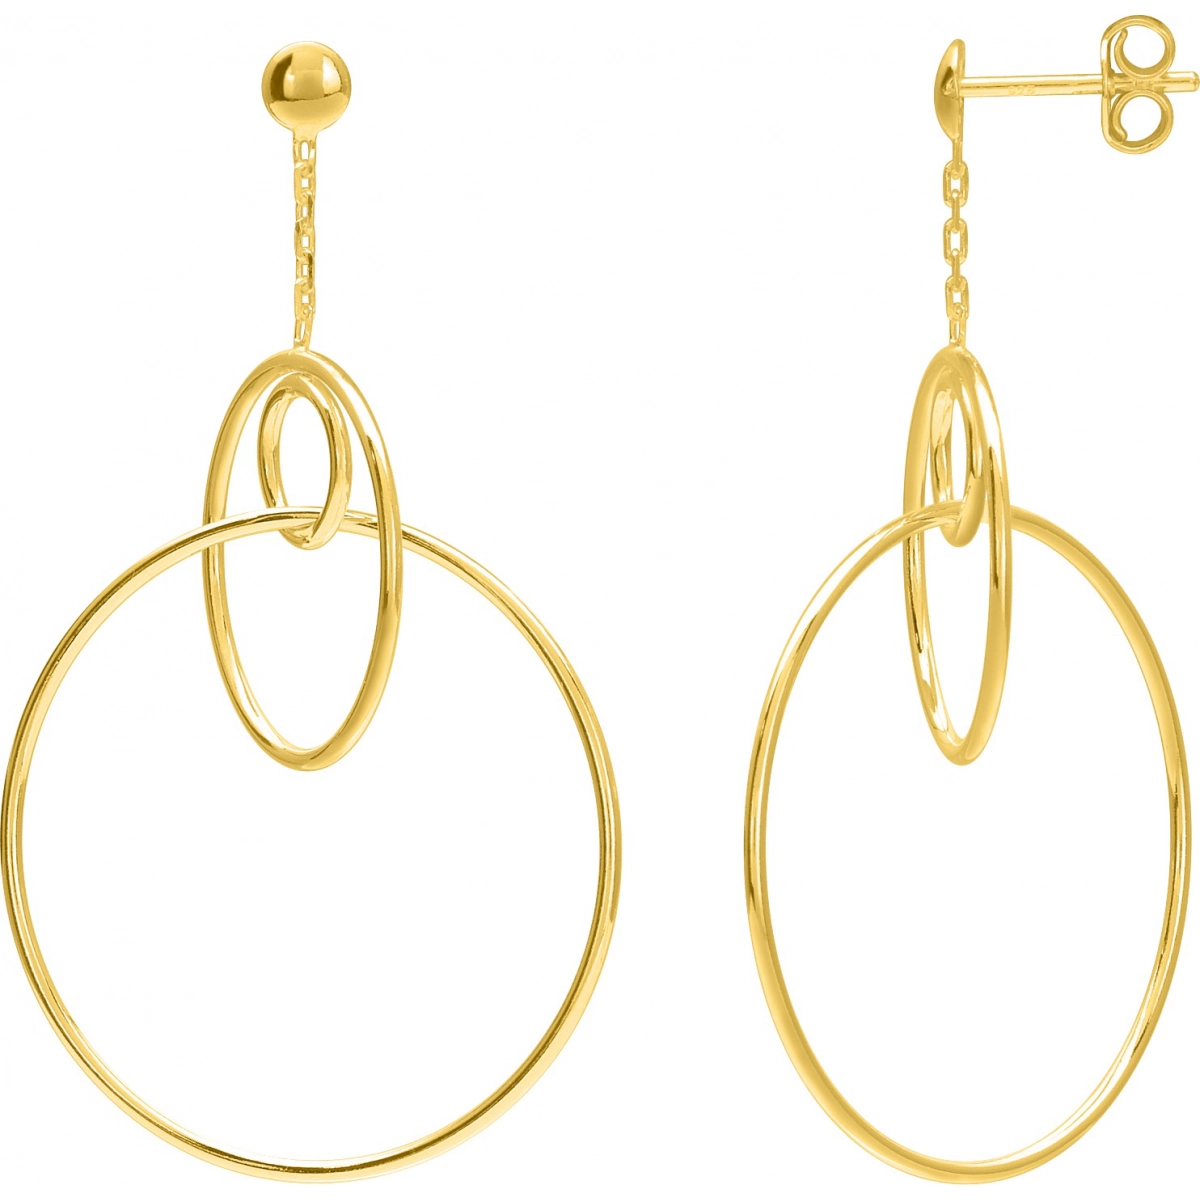 Earrings pair gold plated Brass Lua Blanca  135657.0